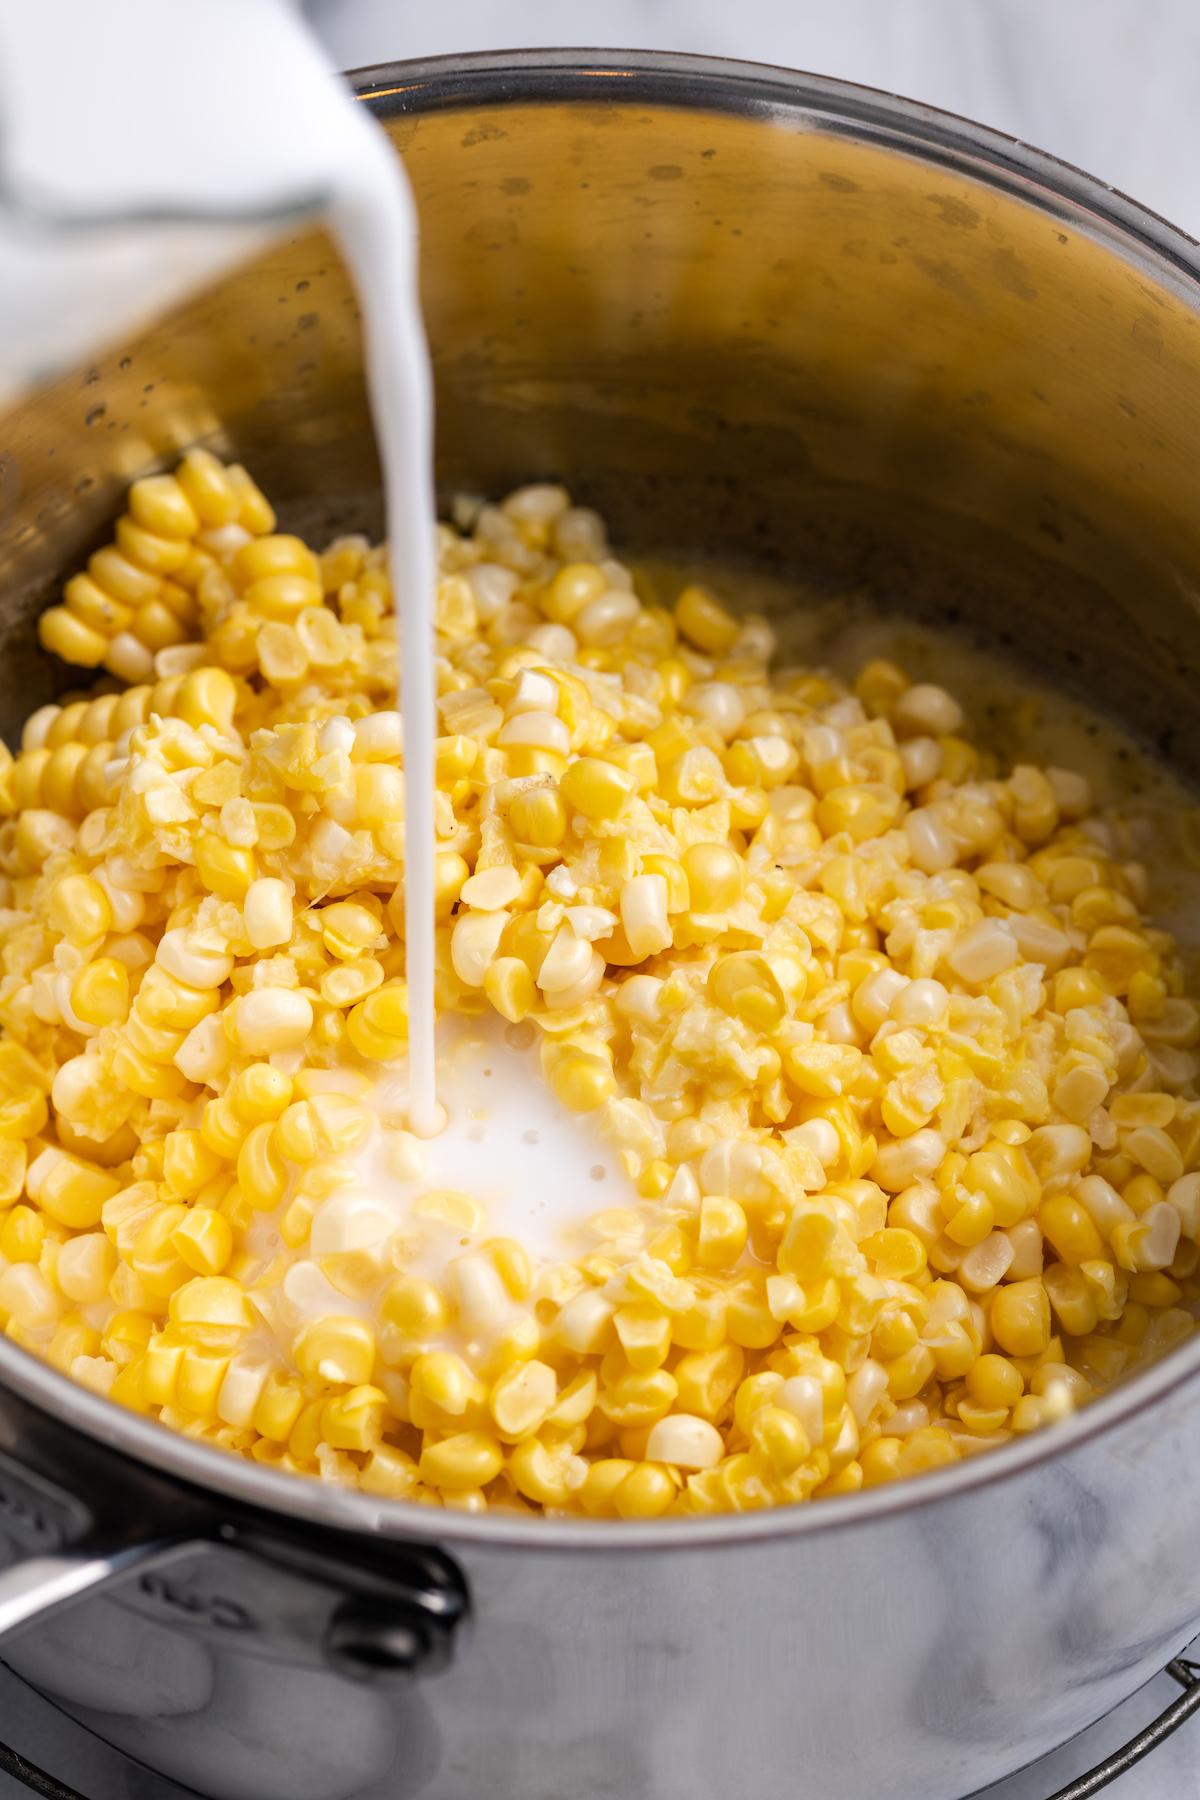 Pouring vegan milk into pot of corn